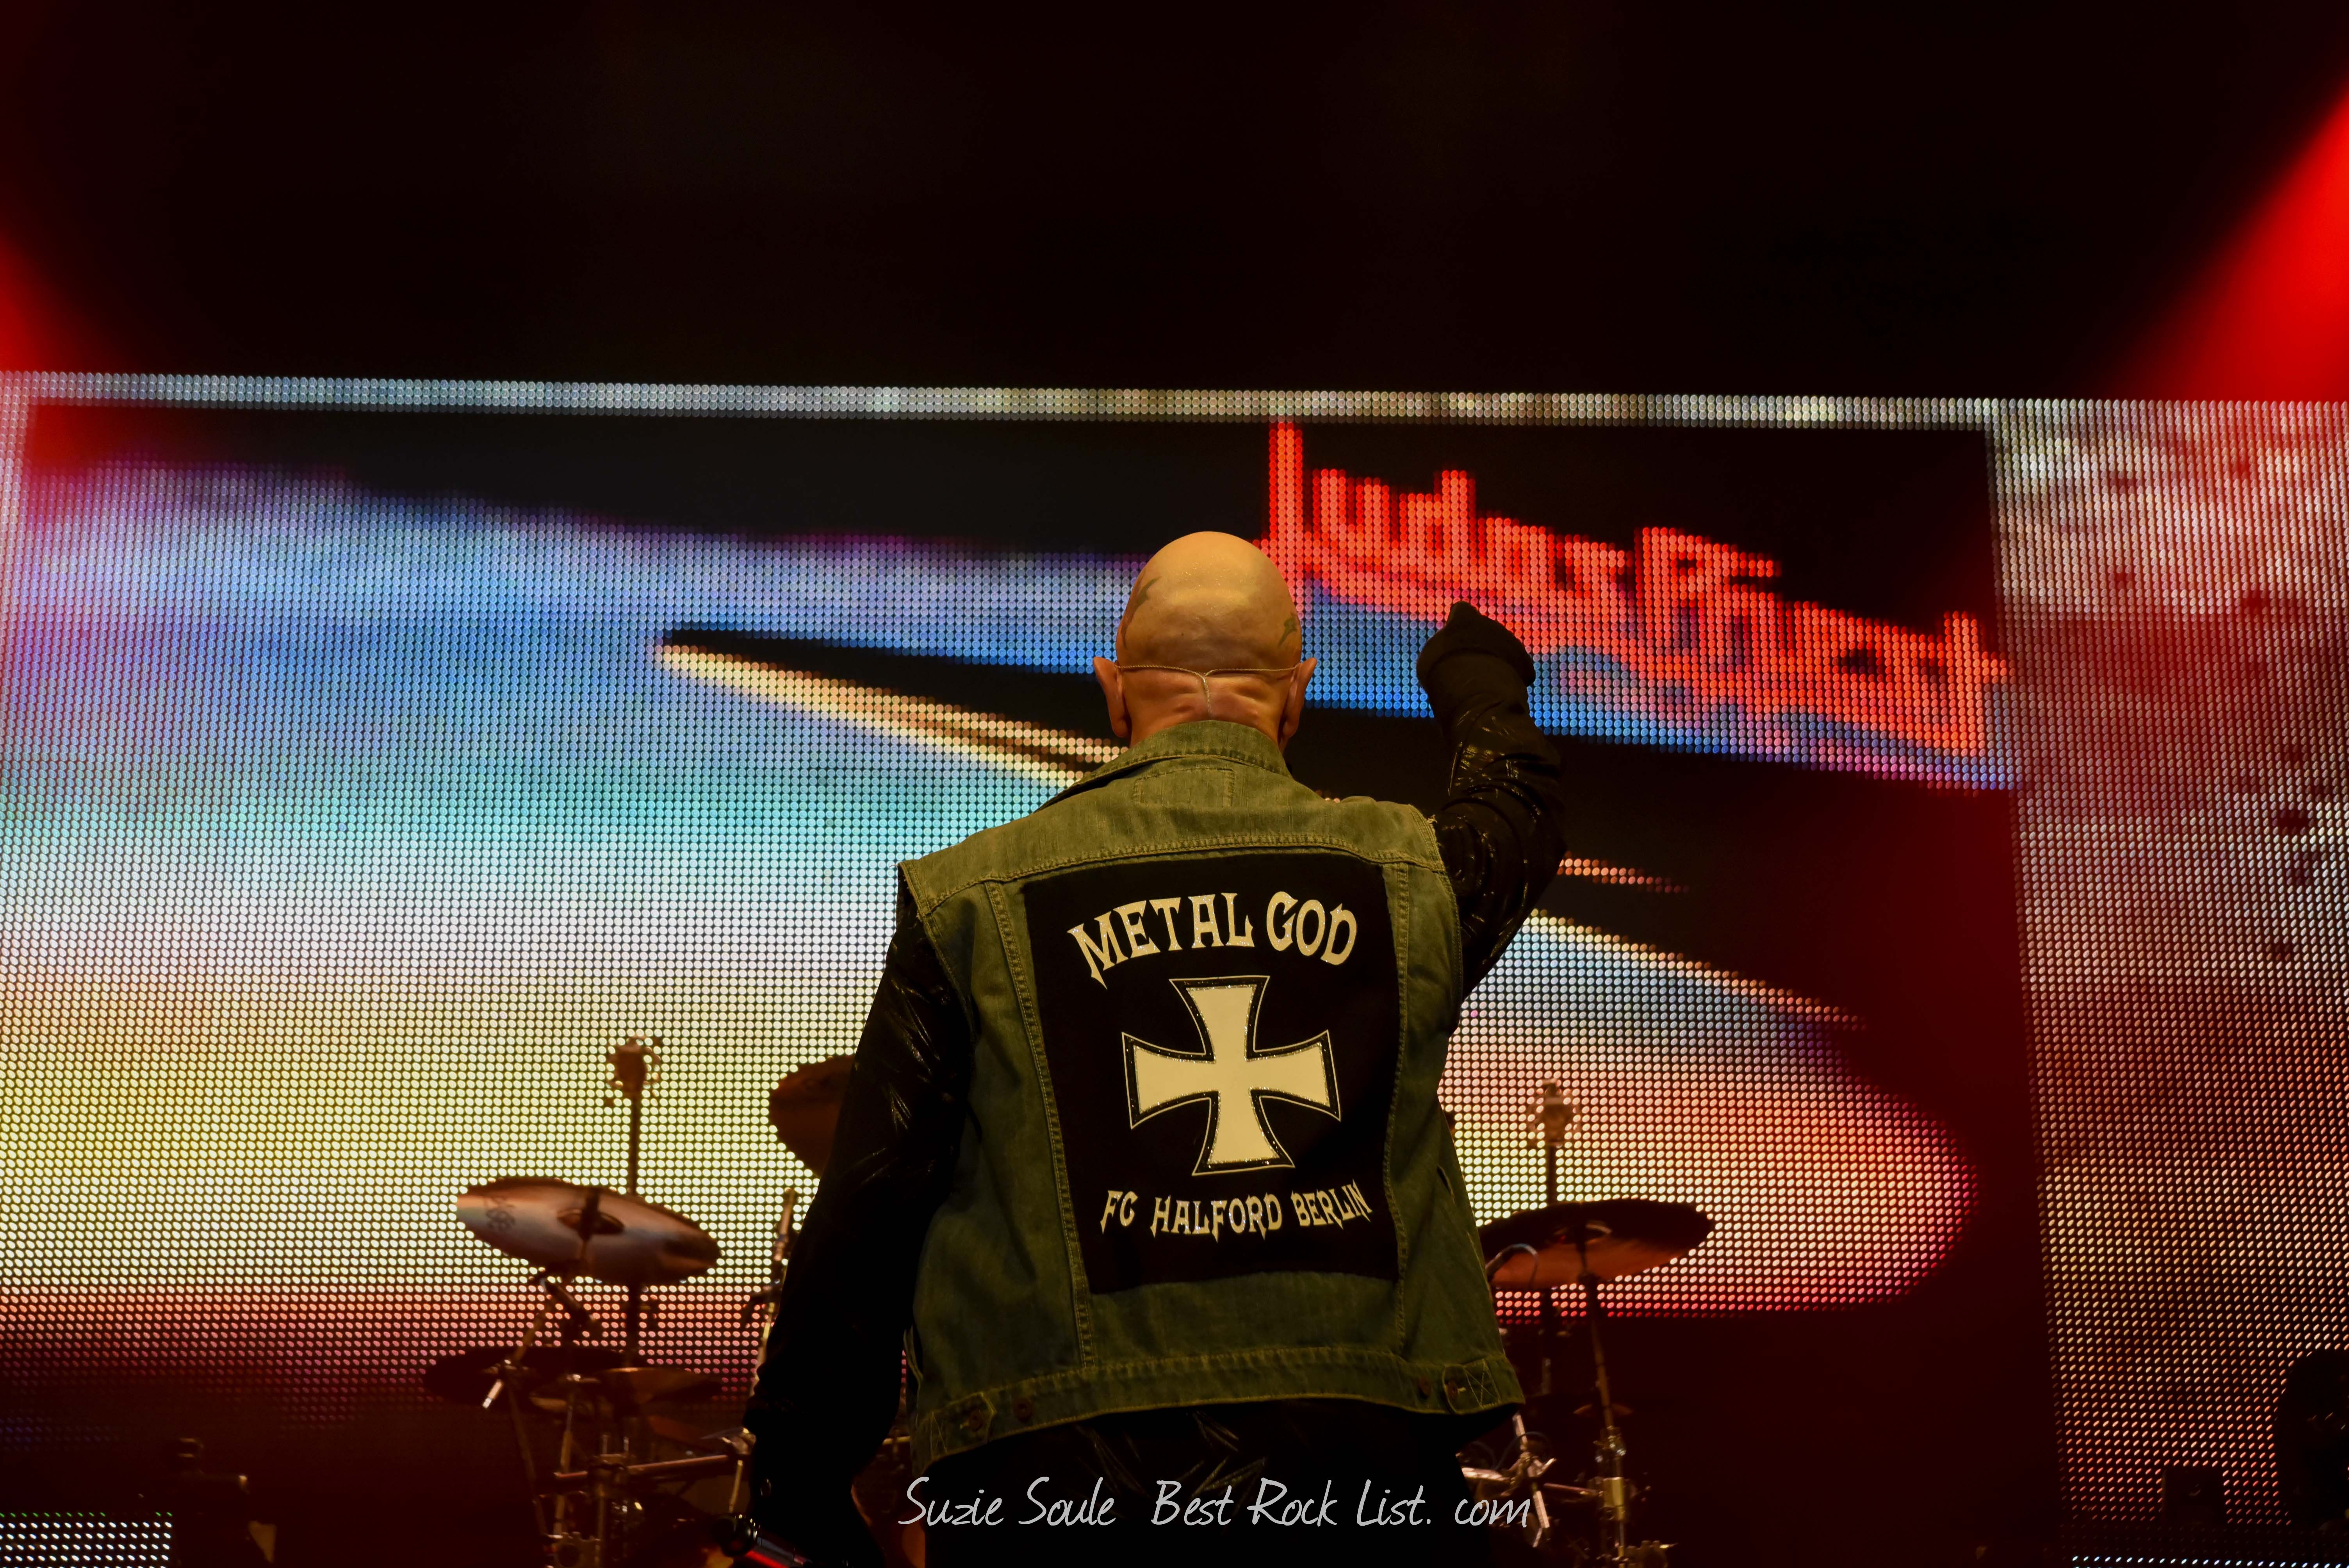 Rob Halford of Judas Priest